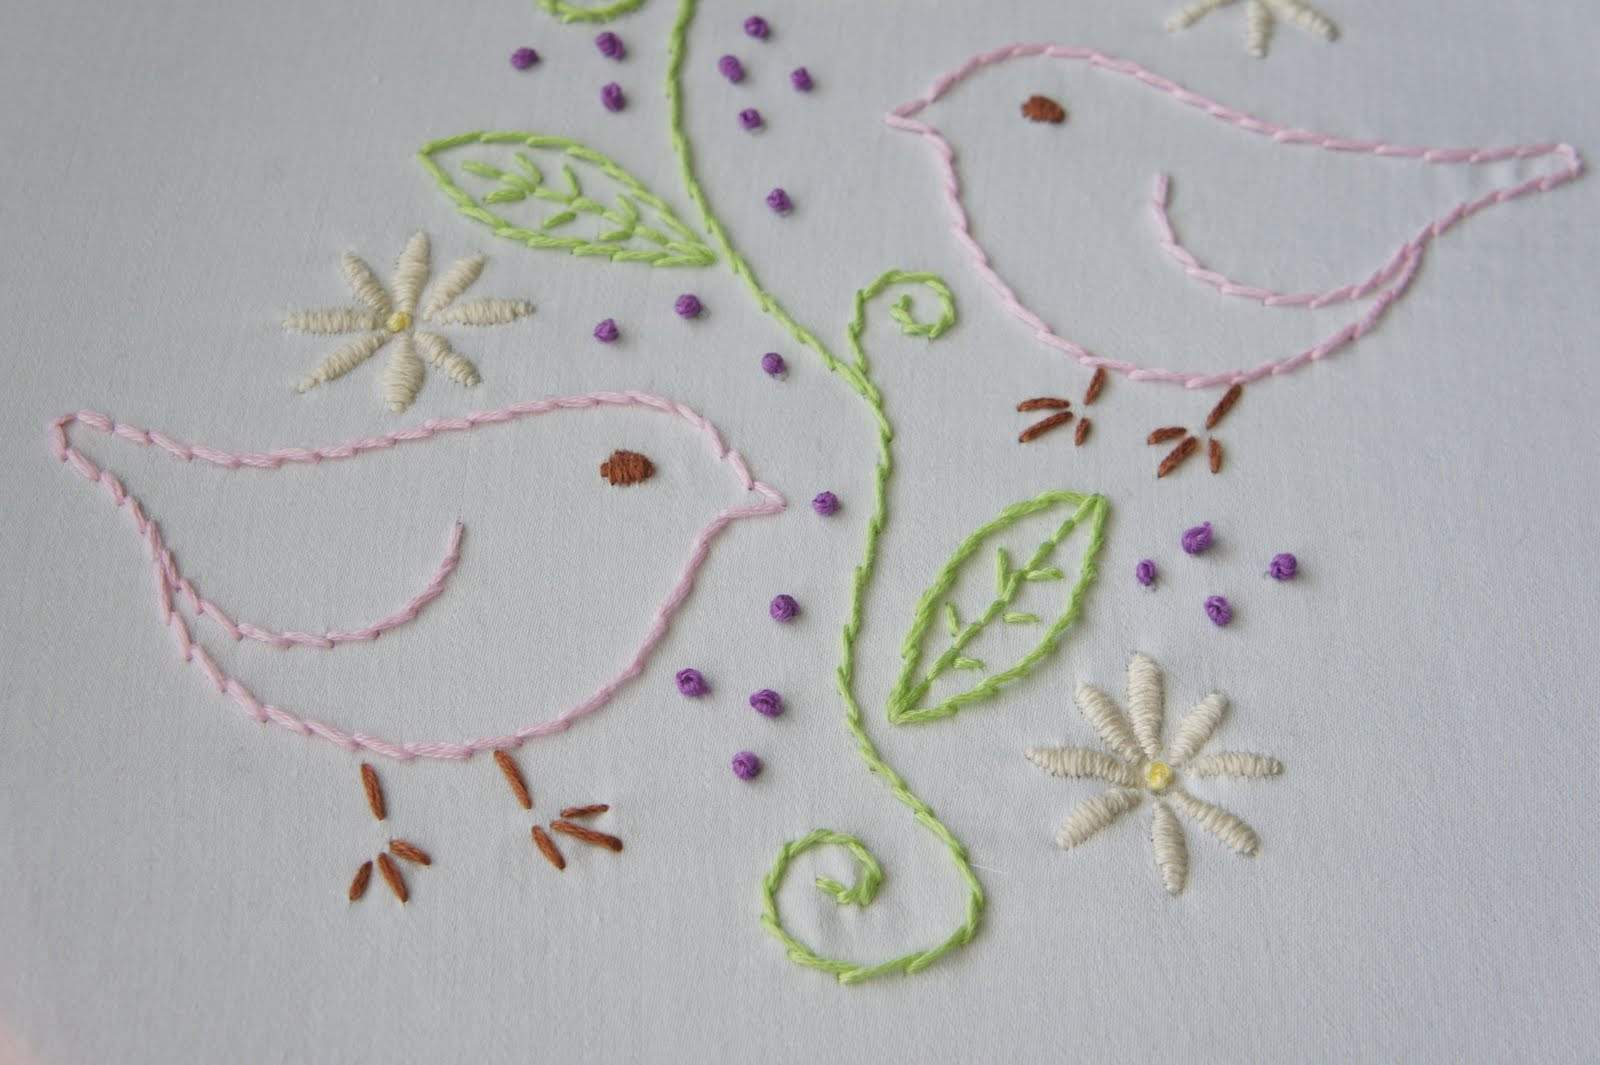 Hand Embroidery Patterns Free New Hand Stitch Embroidery Patterns Free Embroidery Patterns Hand